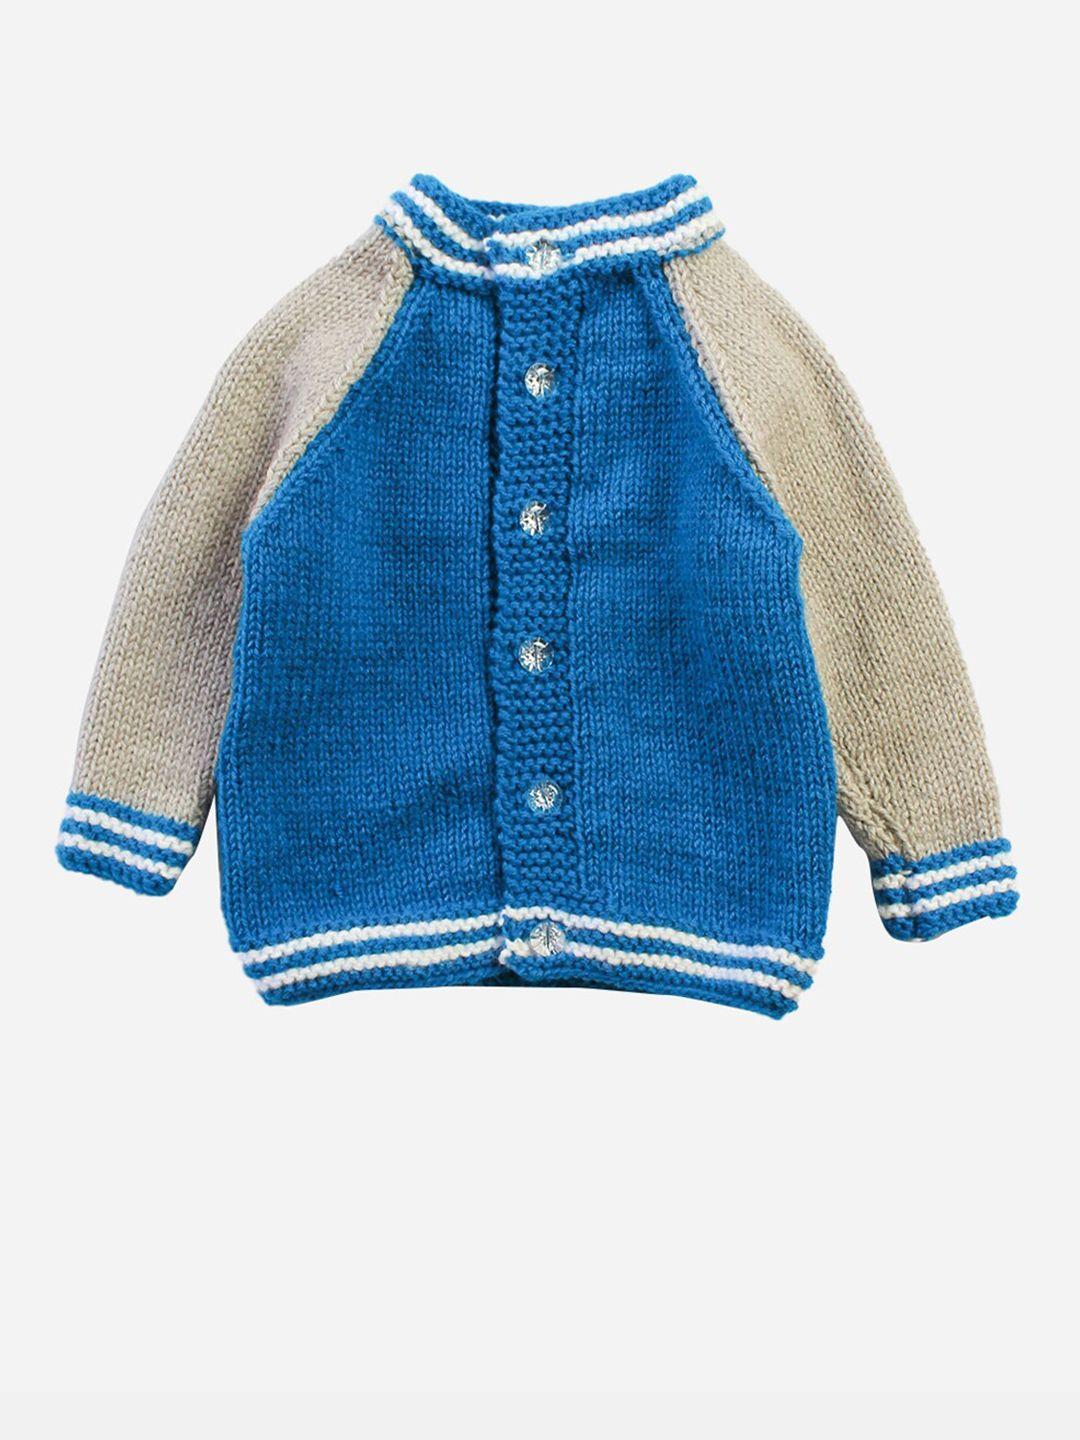 woonie unisex kids blue colourblocked cardigan sweater